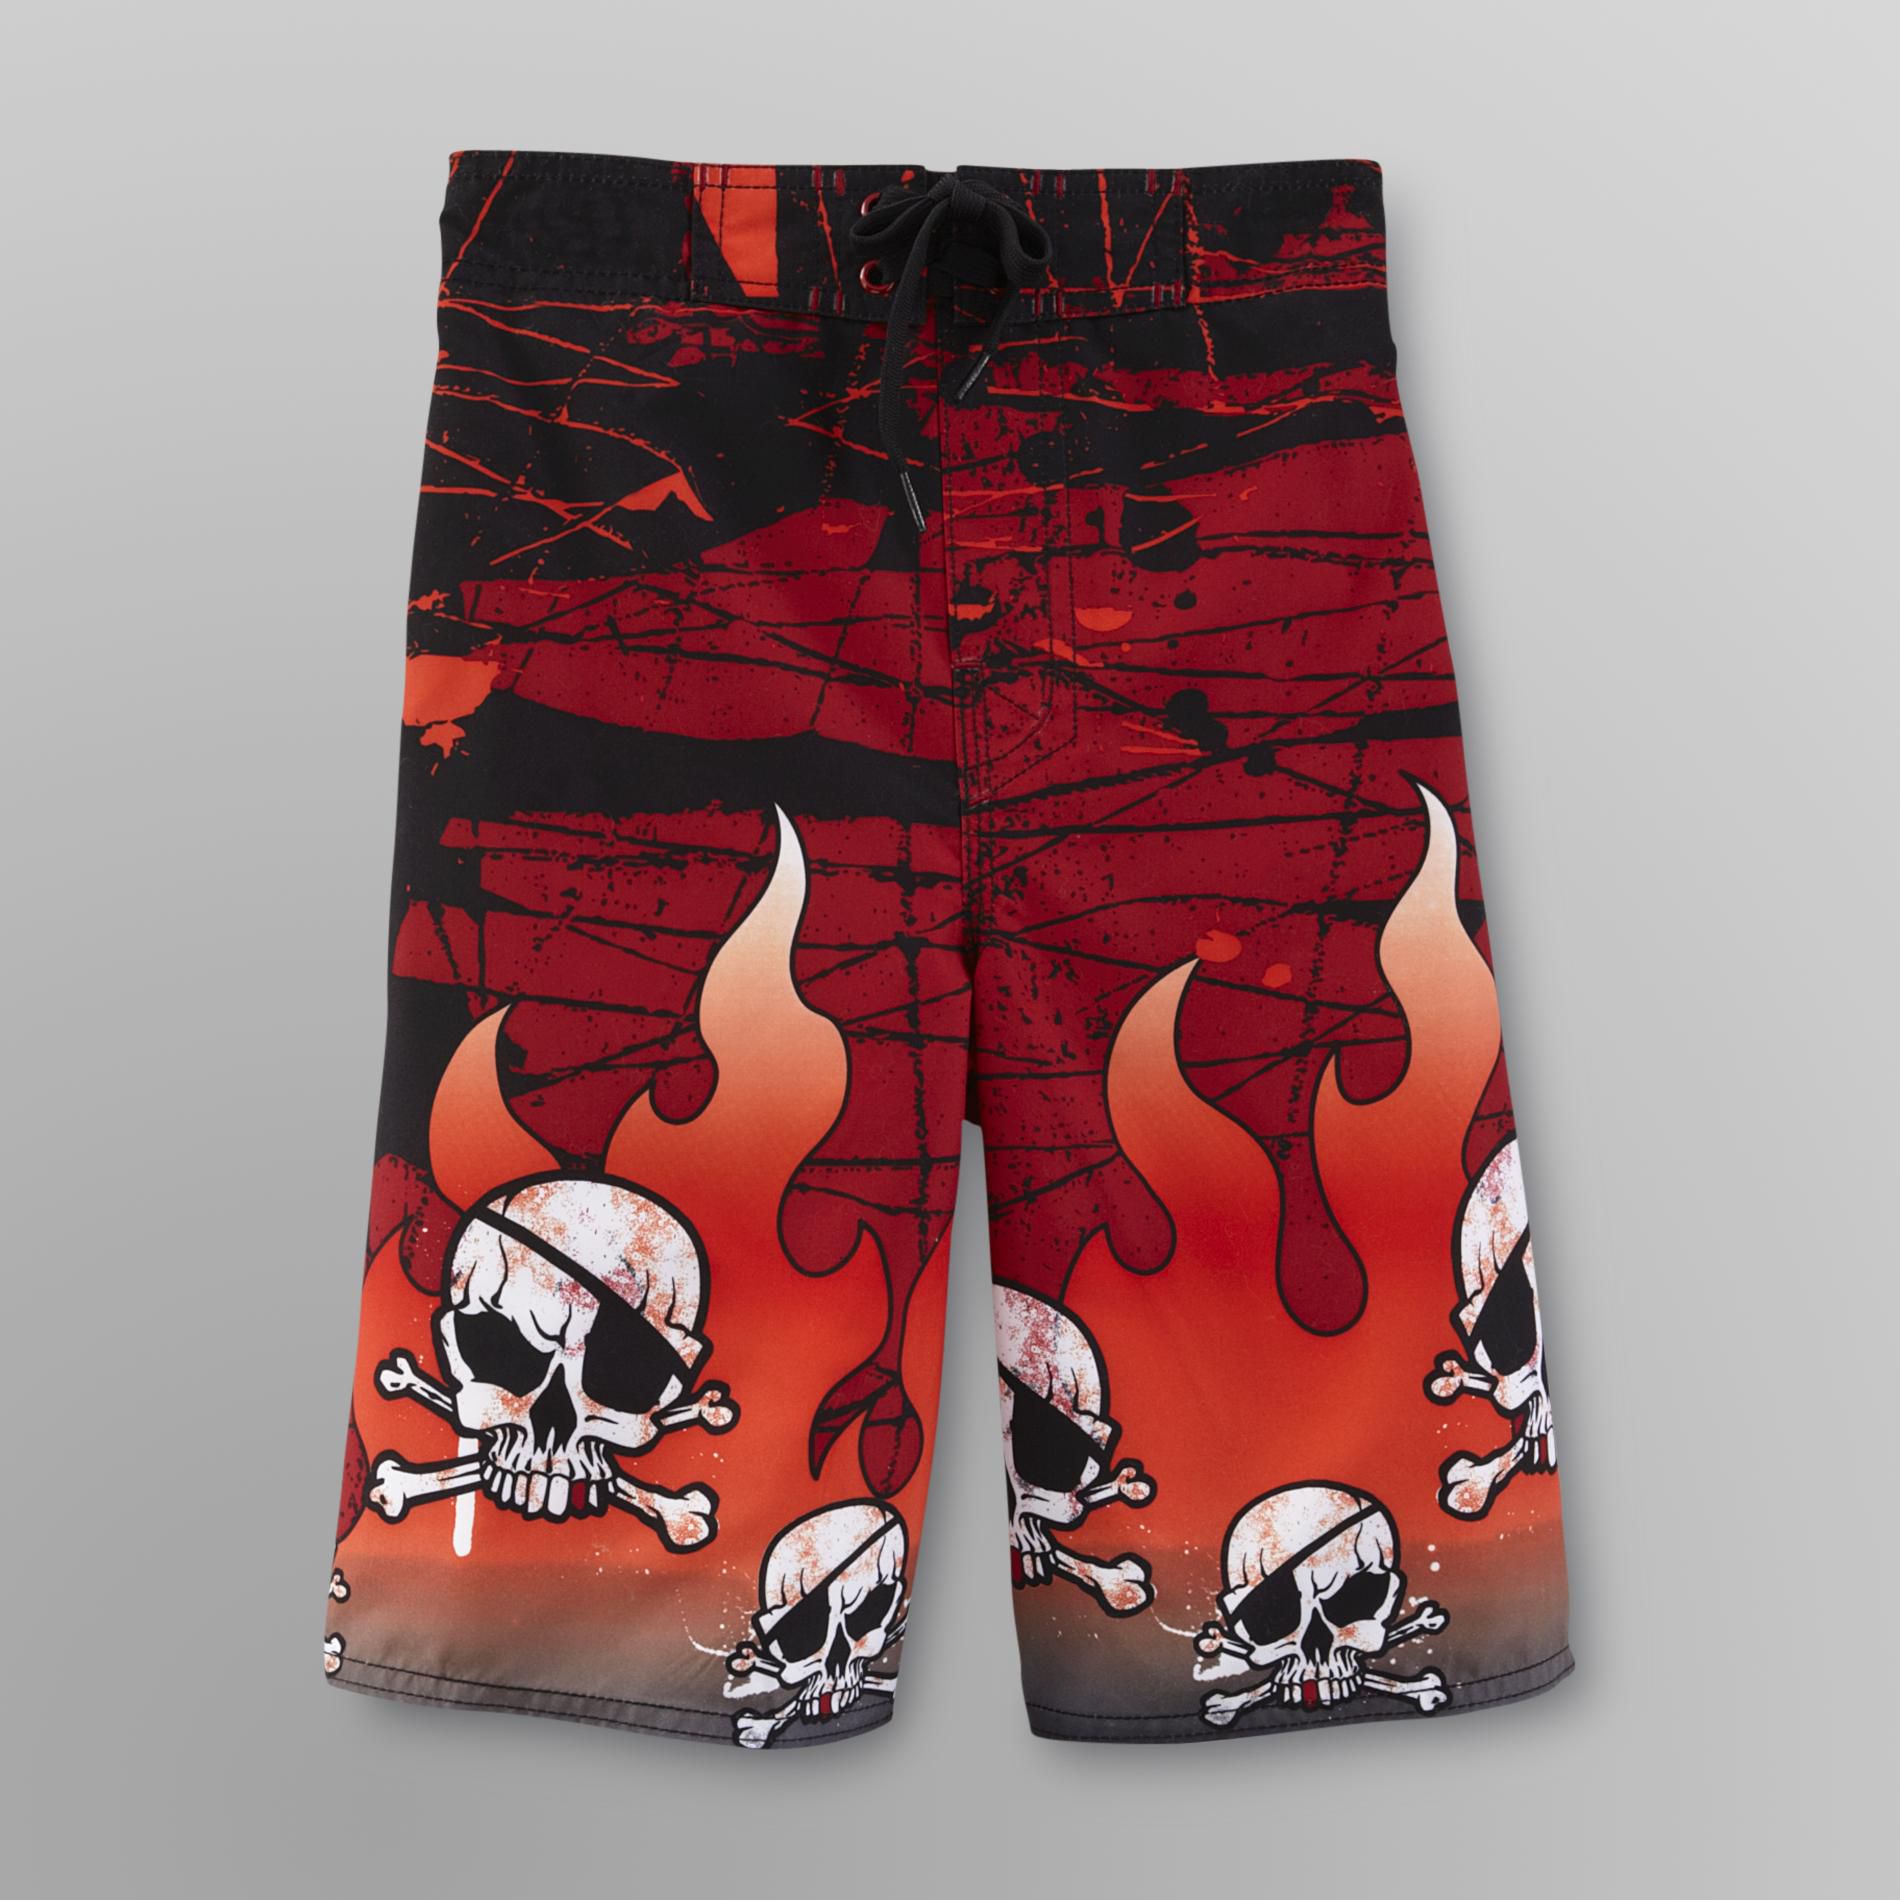 Joe Boxer Boy's Swim Trunks - Flames/Pirate Skulls